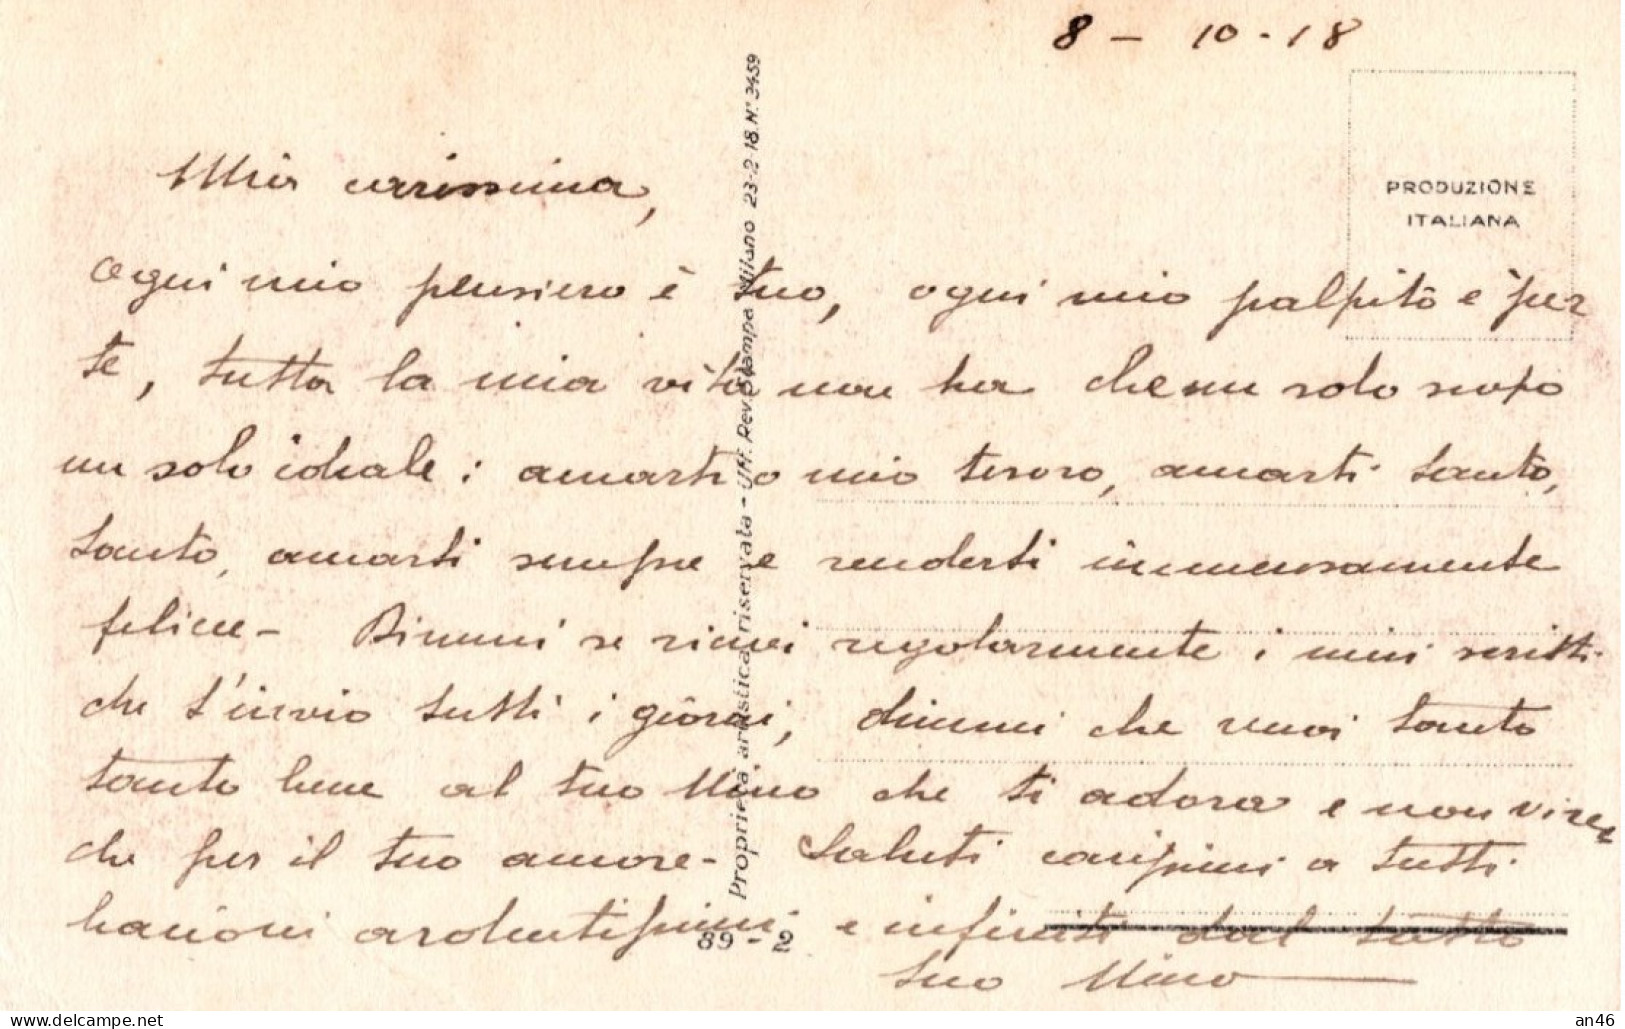 ADELINA ZANDRINO - N. 89-2 - V. Revisione Stampa Milano N. 3459 - VGT. 1918 - Zandrino